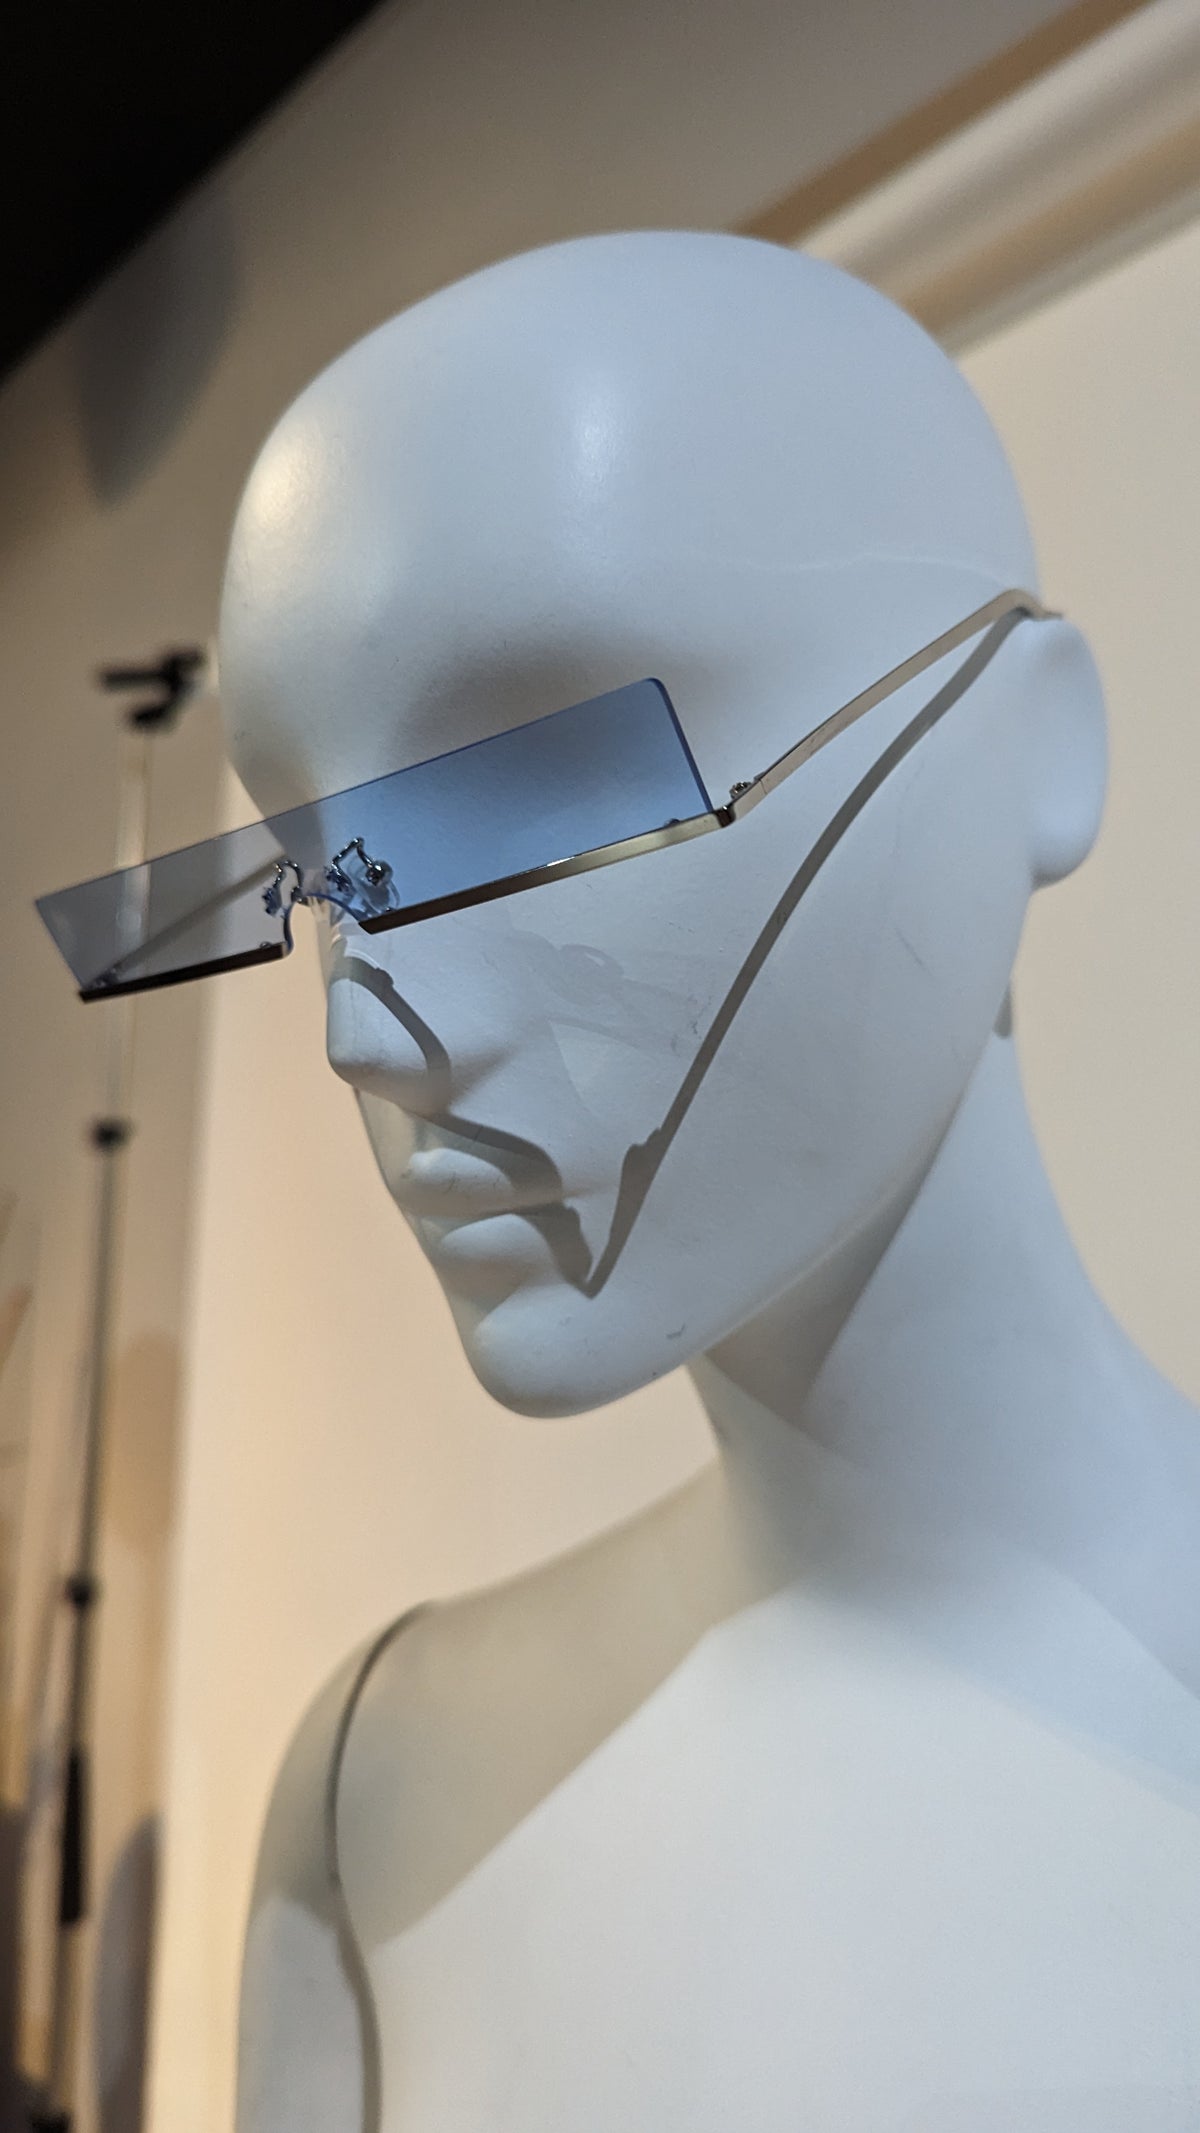 SAMPLE SALE - Ultra Thin Blue Tinted Sunglasses - FINAL SALE